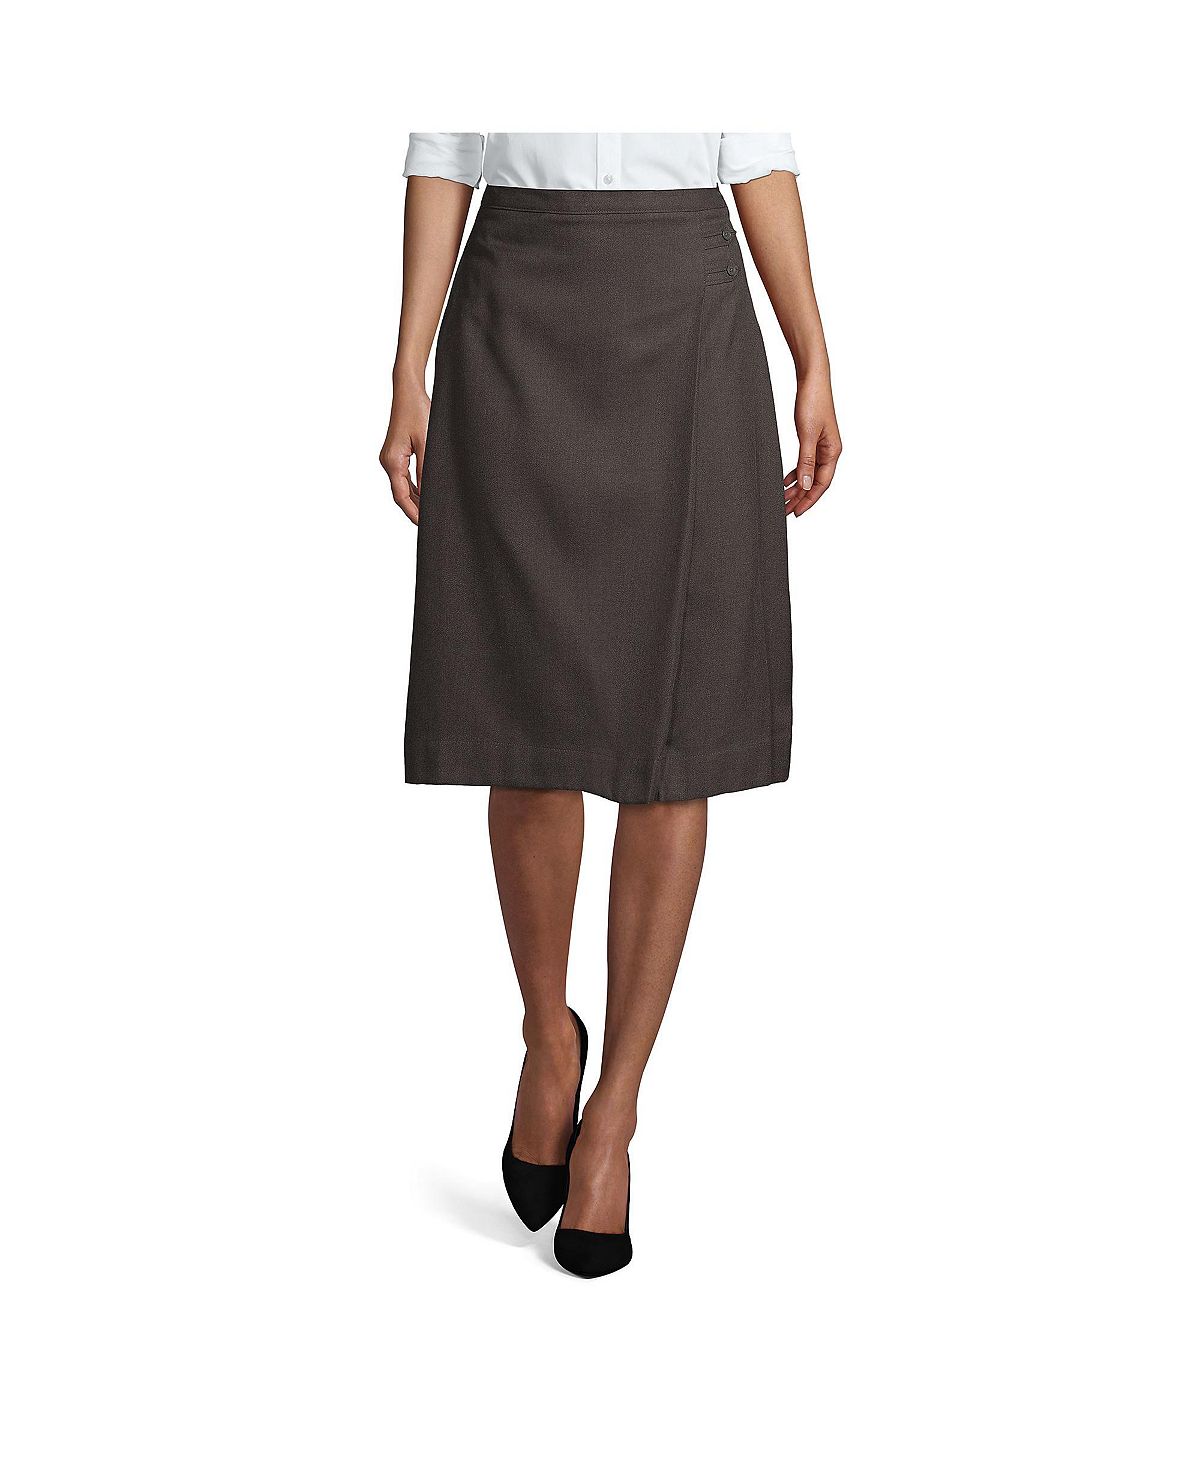 Школьная форма, женская однотонная юбка-трапеция ниже колена Lands' End, серый